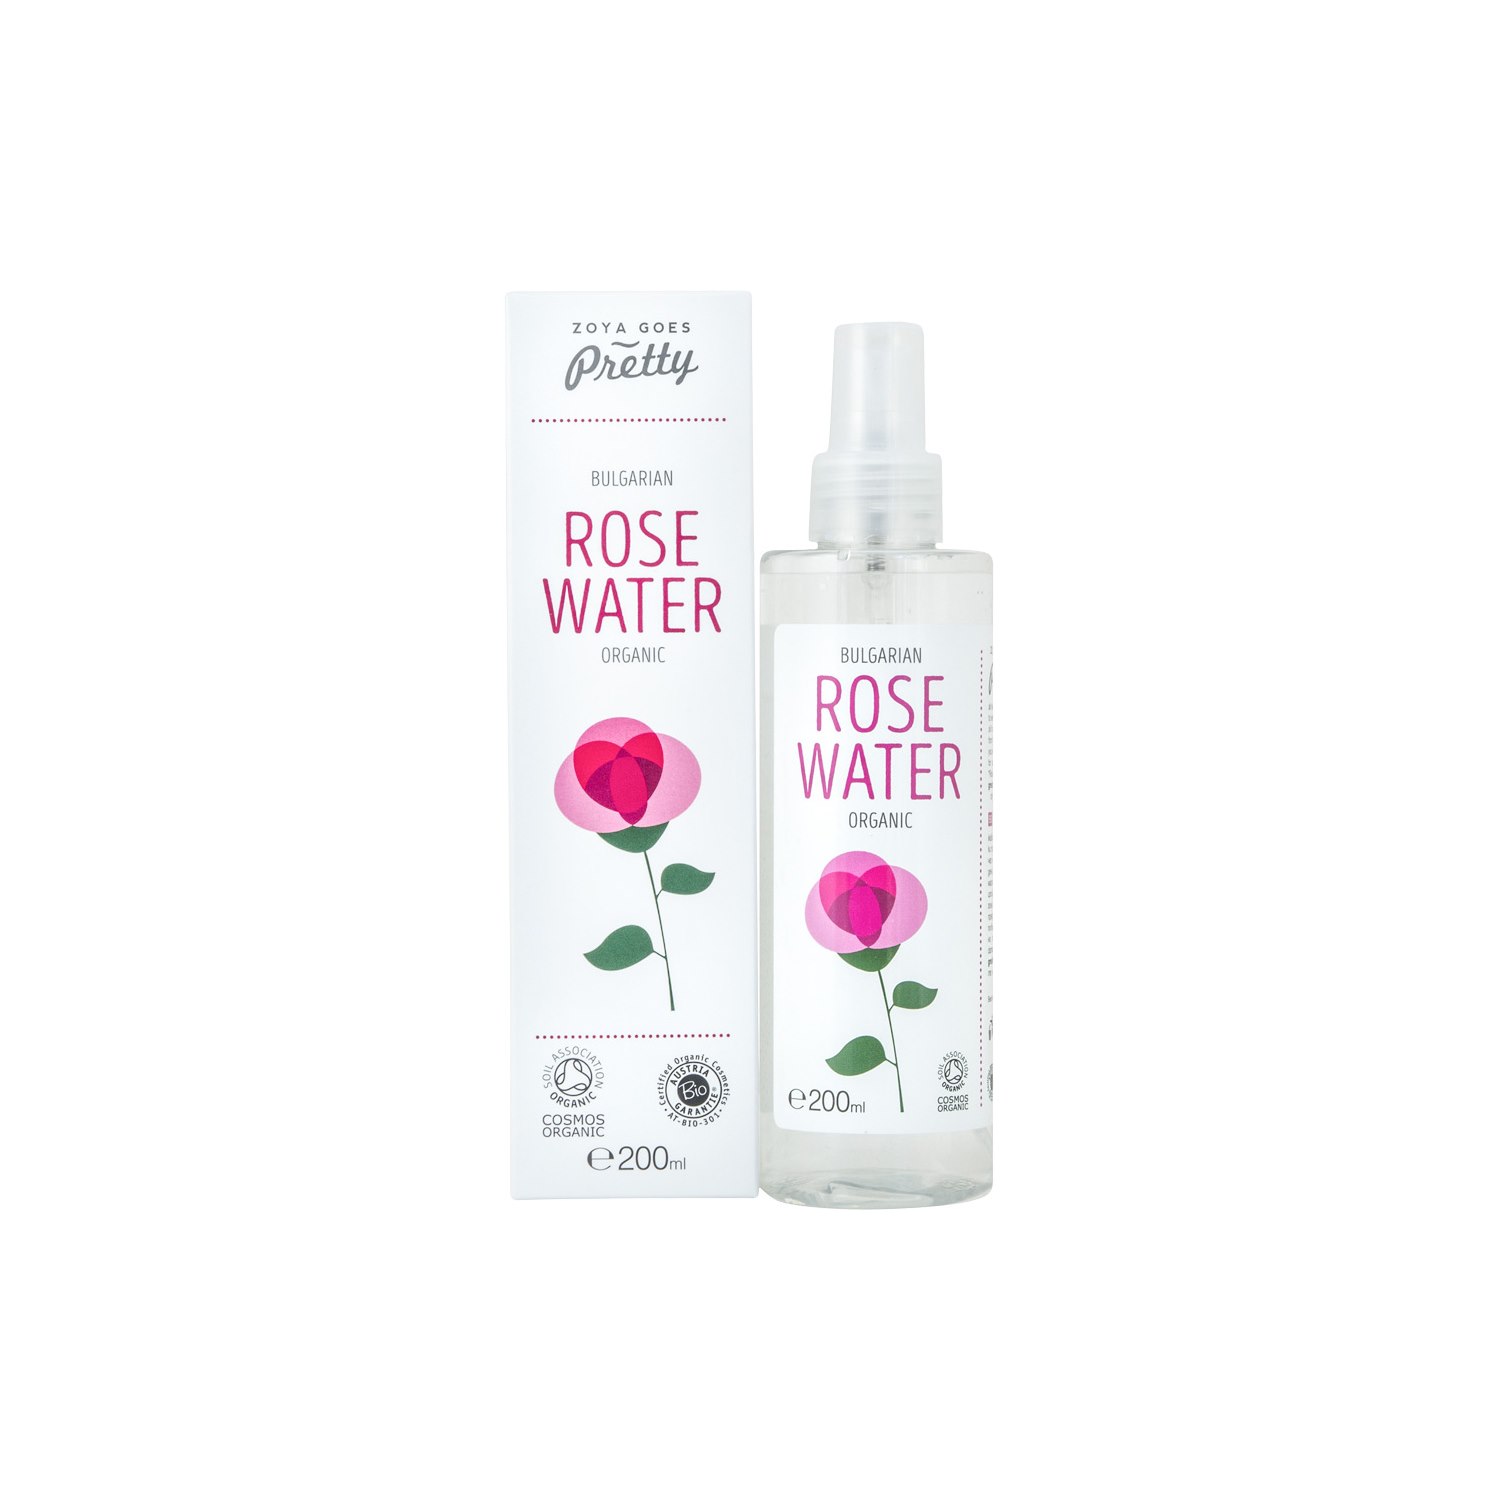 Zoya Goes Pretty Organic Bulgarian Rose Water